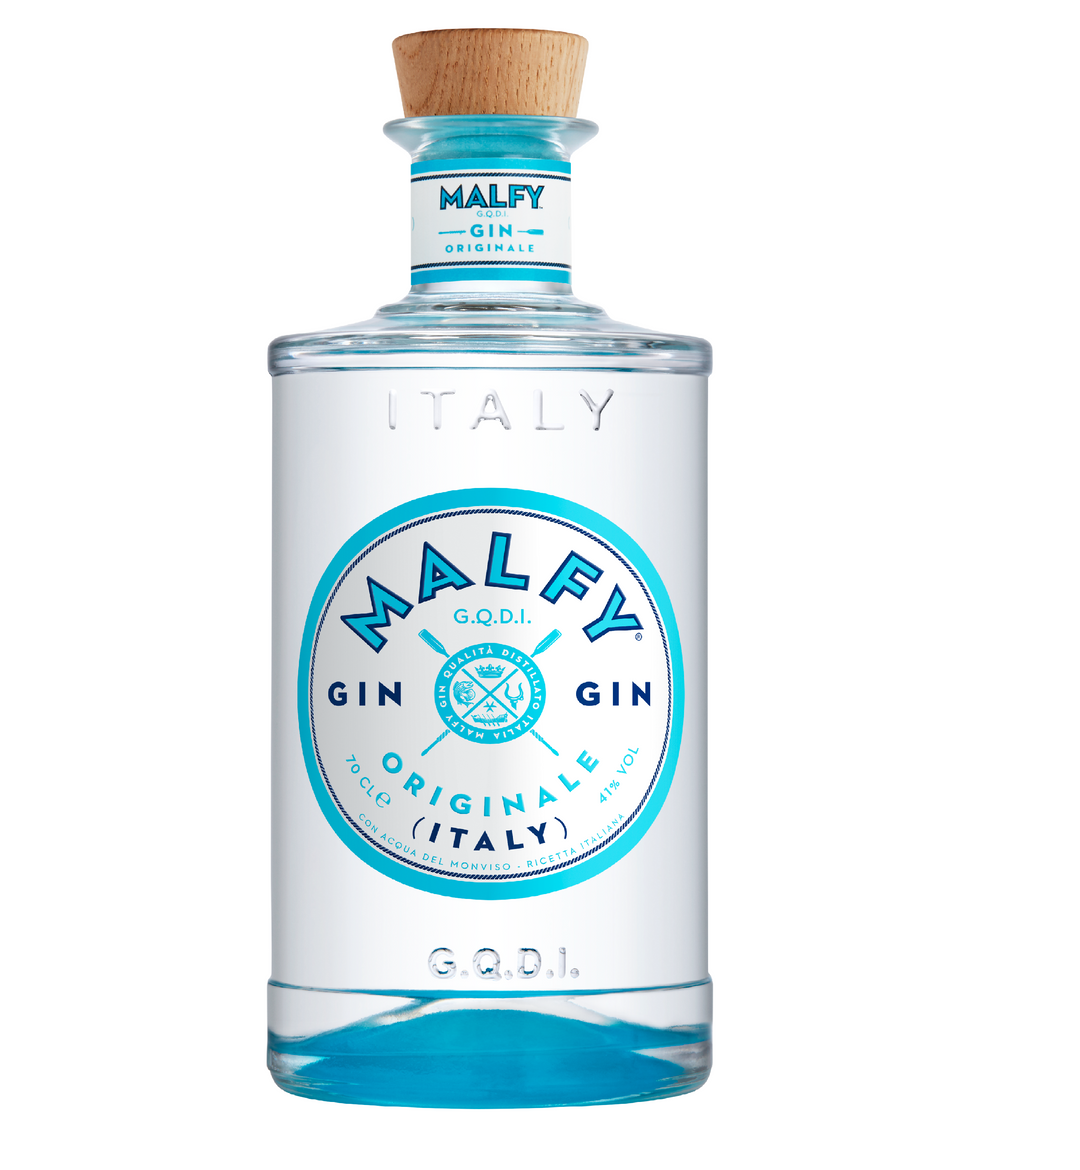 Malfy Originale Gin 41% 700ml